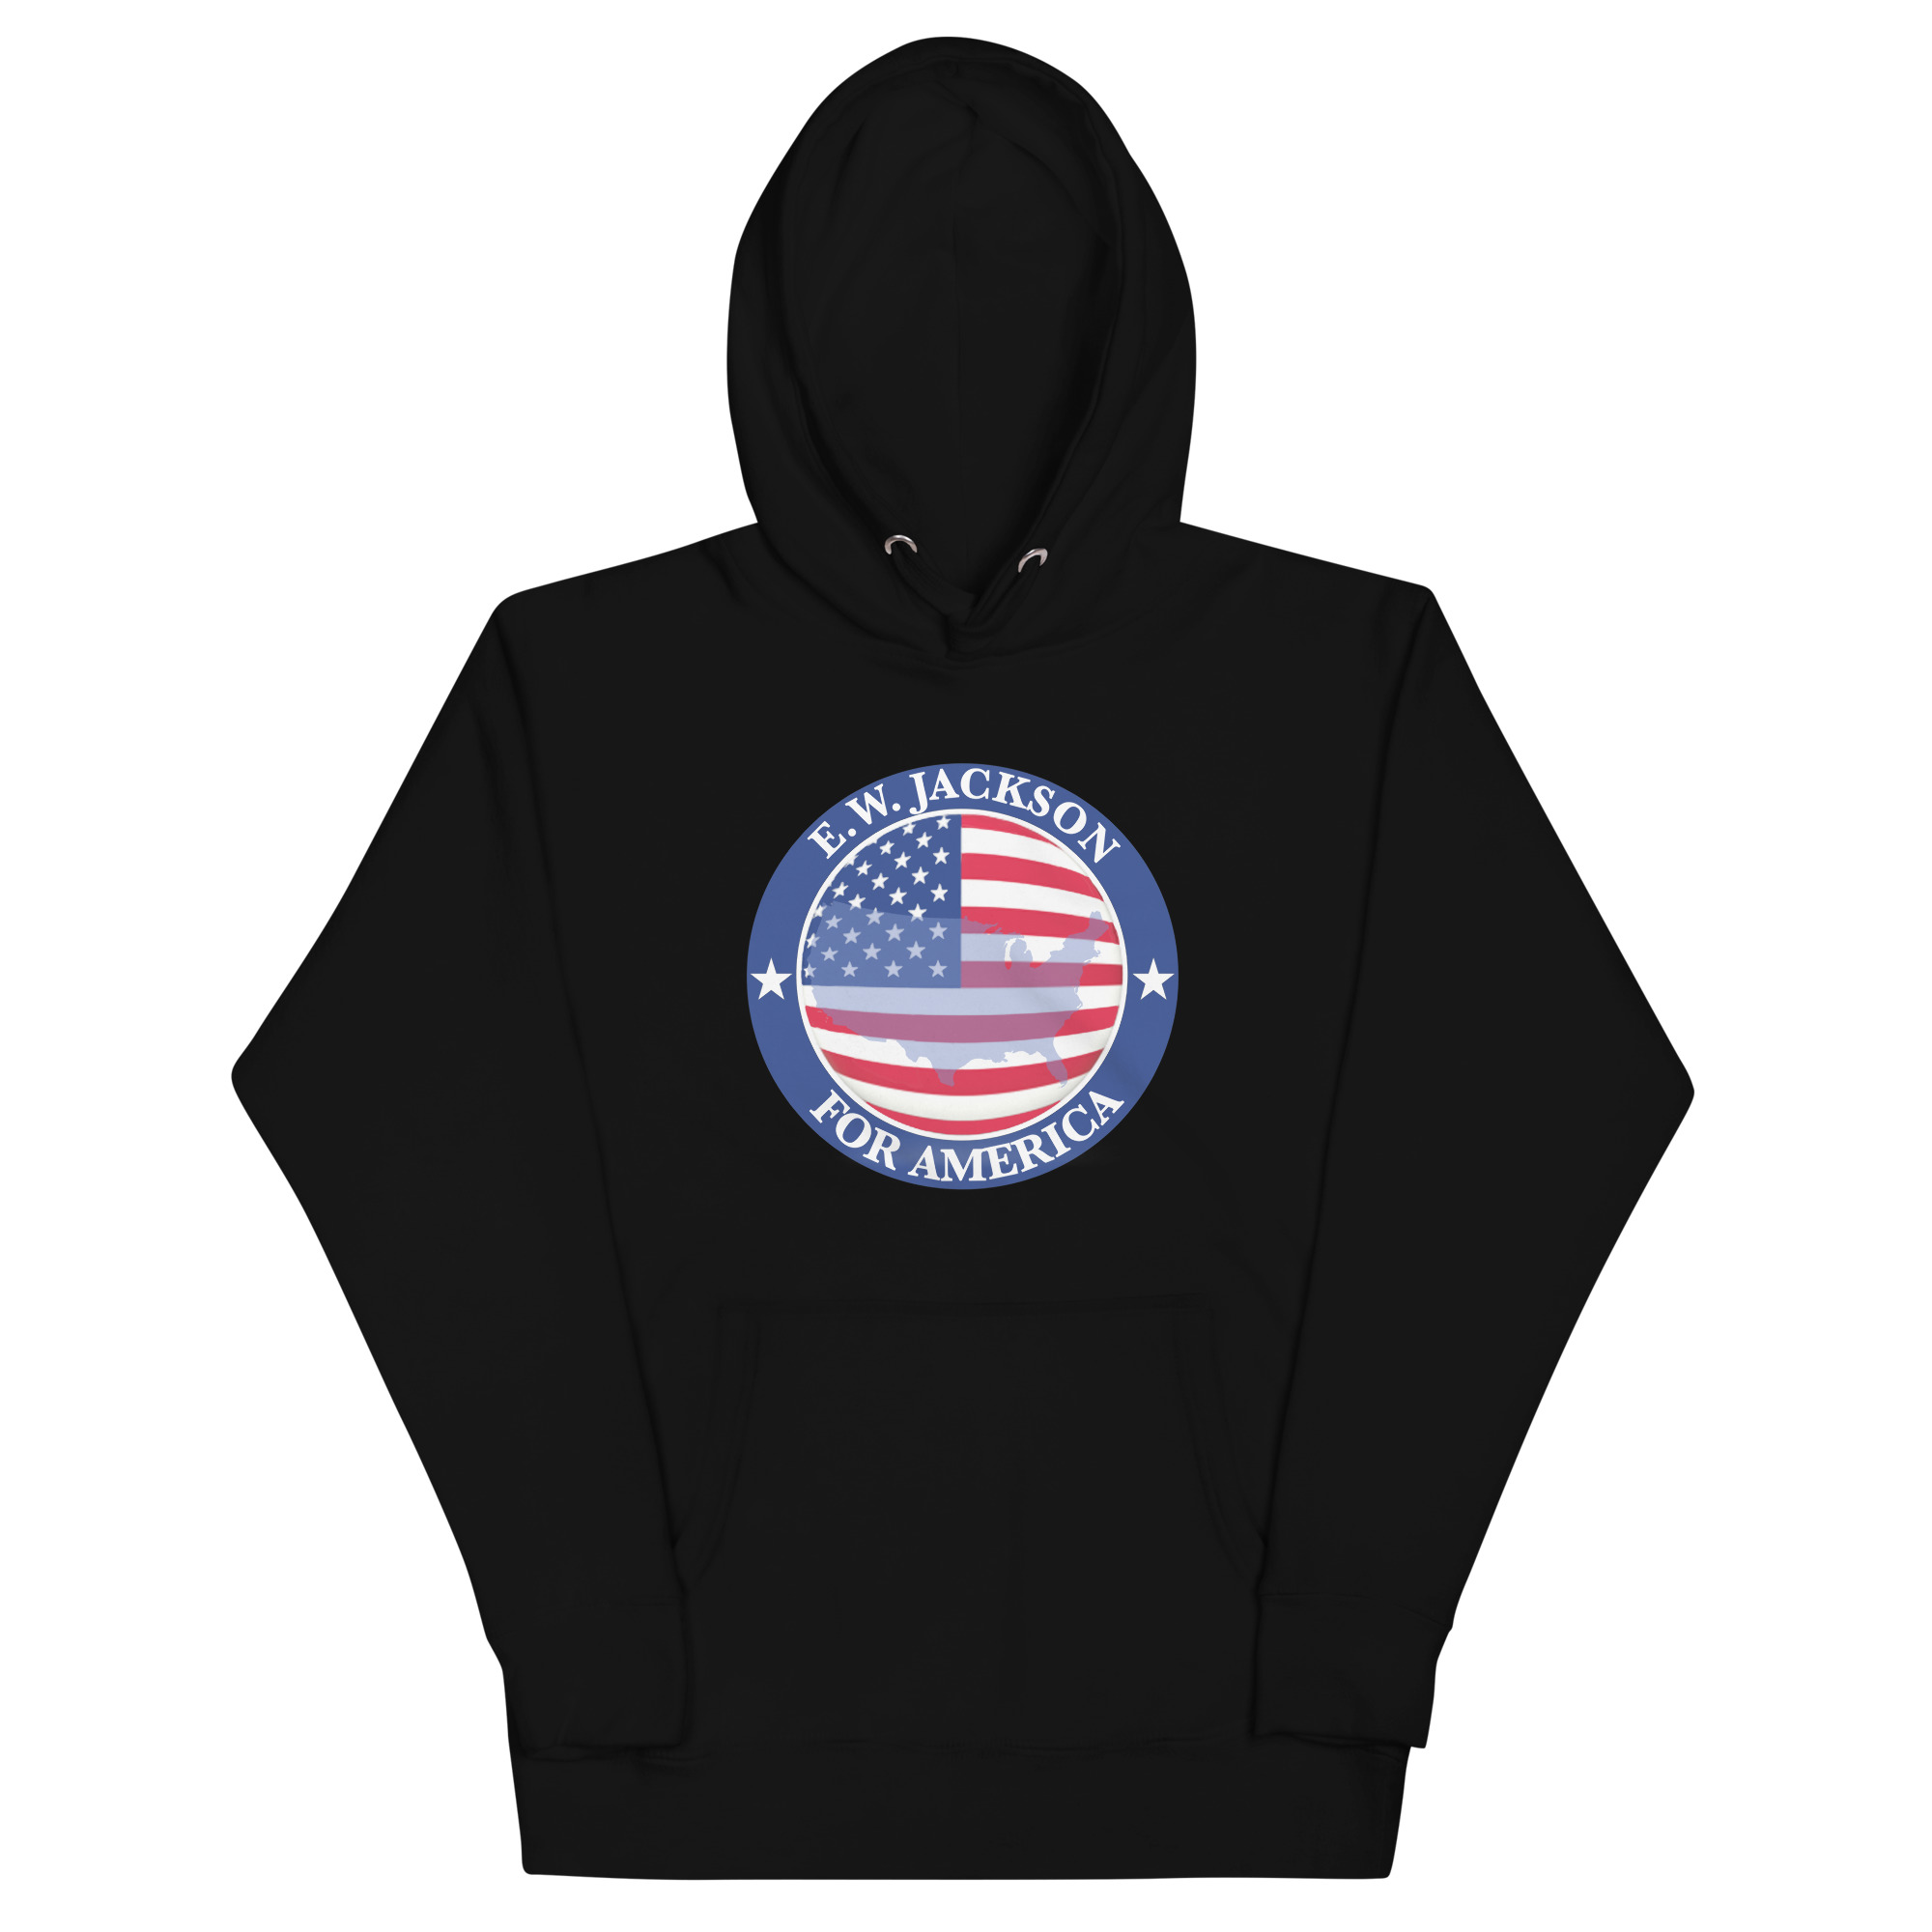 ew jackson for america unisex hoodie